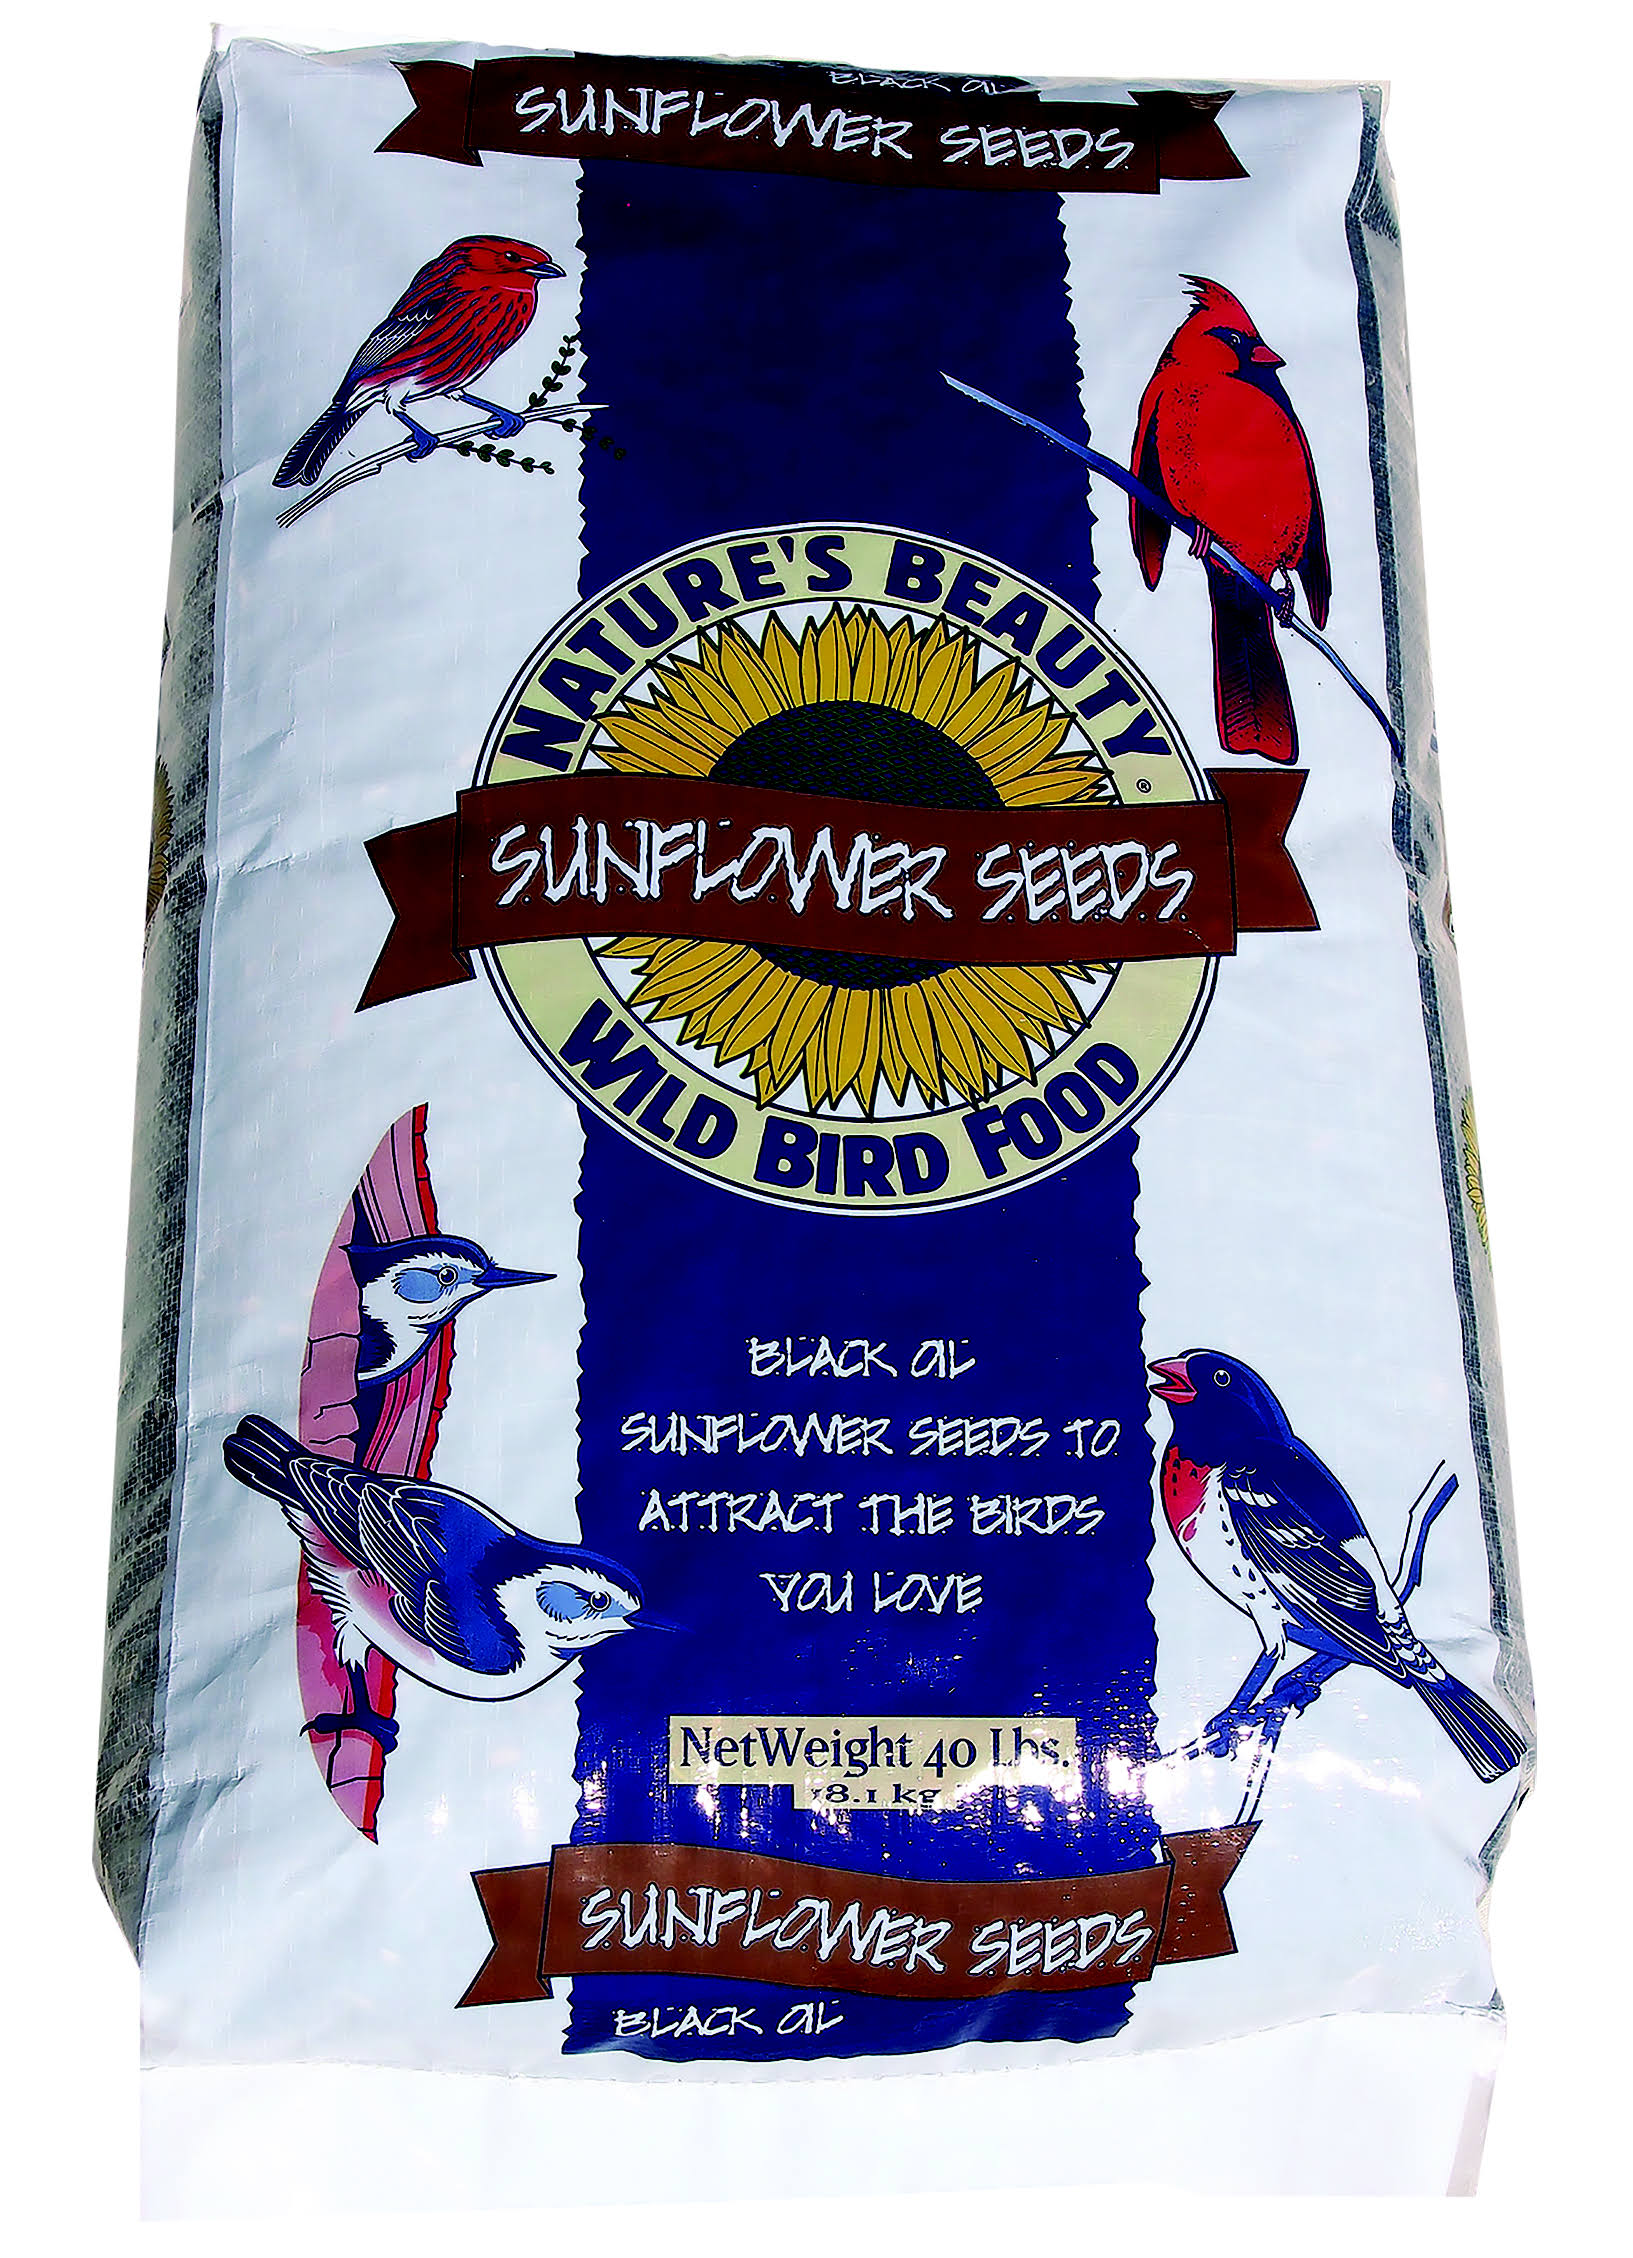 Nature's Beauty Wild Bird Food Black Oil Sunflower Seeds Bird Food